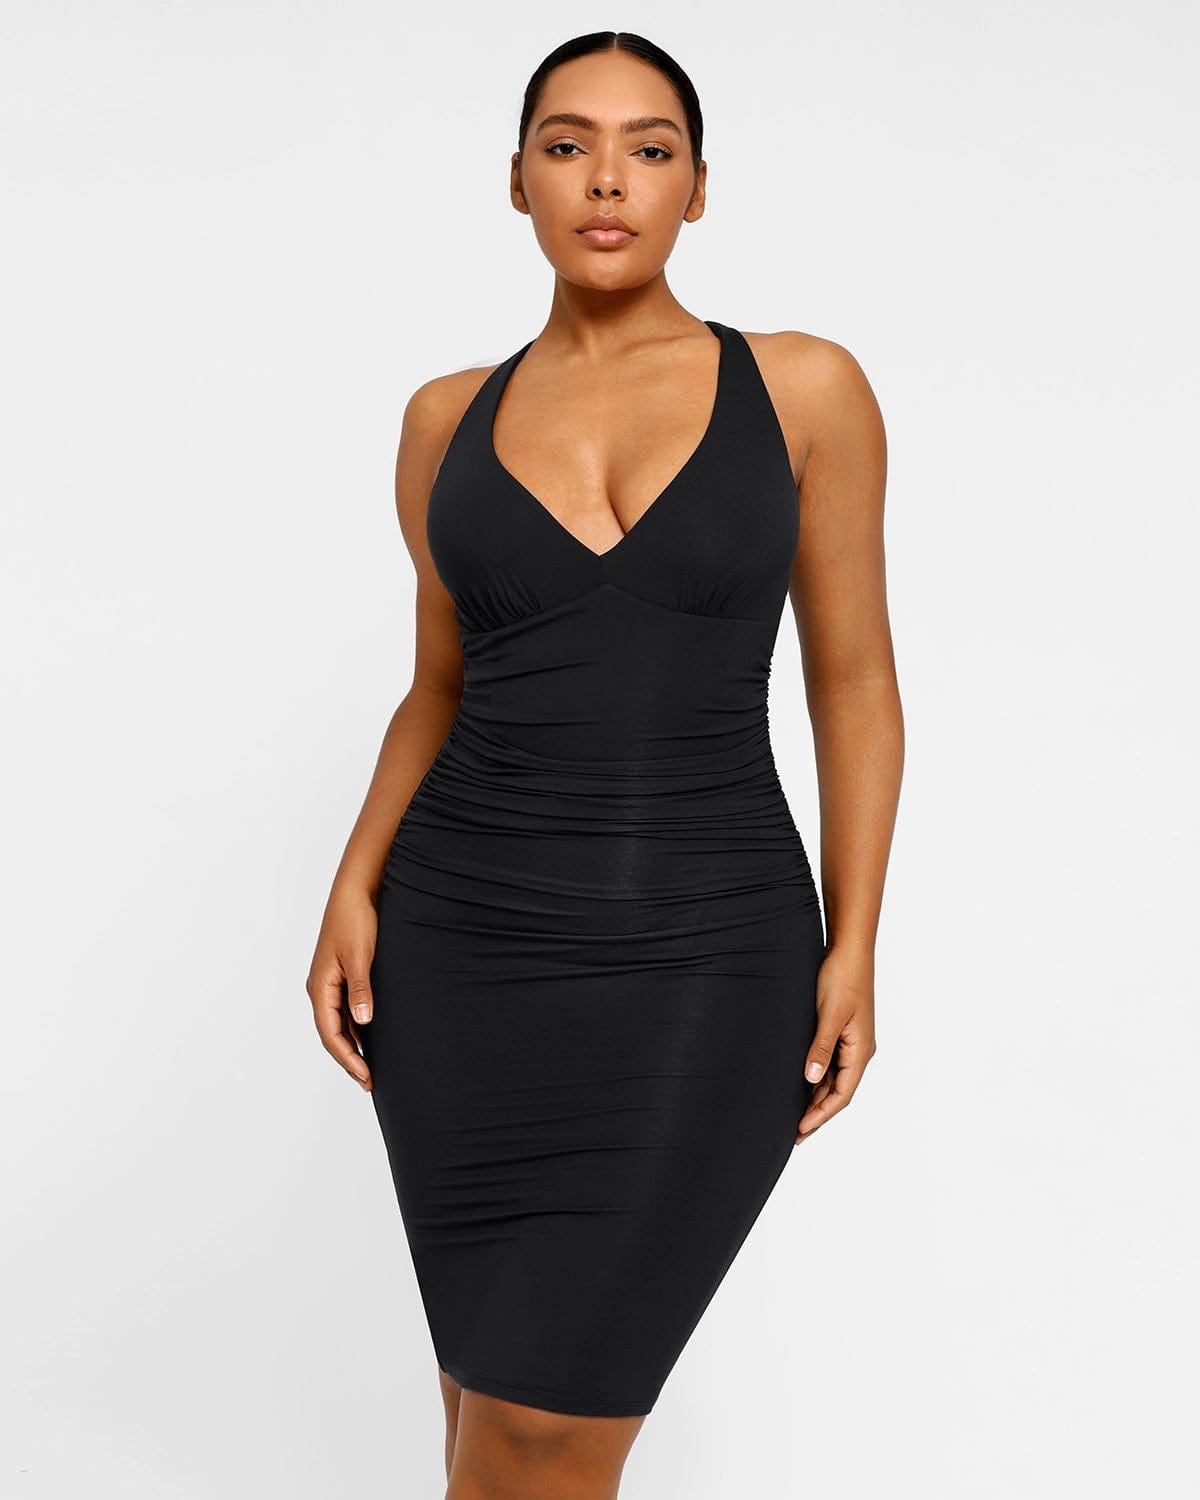 Vaslanda Strapless Shapewear Slip for Women Tummy Control Seamless Full Body  Shaper Under Dress Slip - Walmart.com